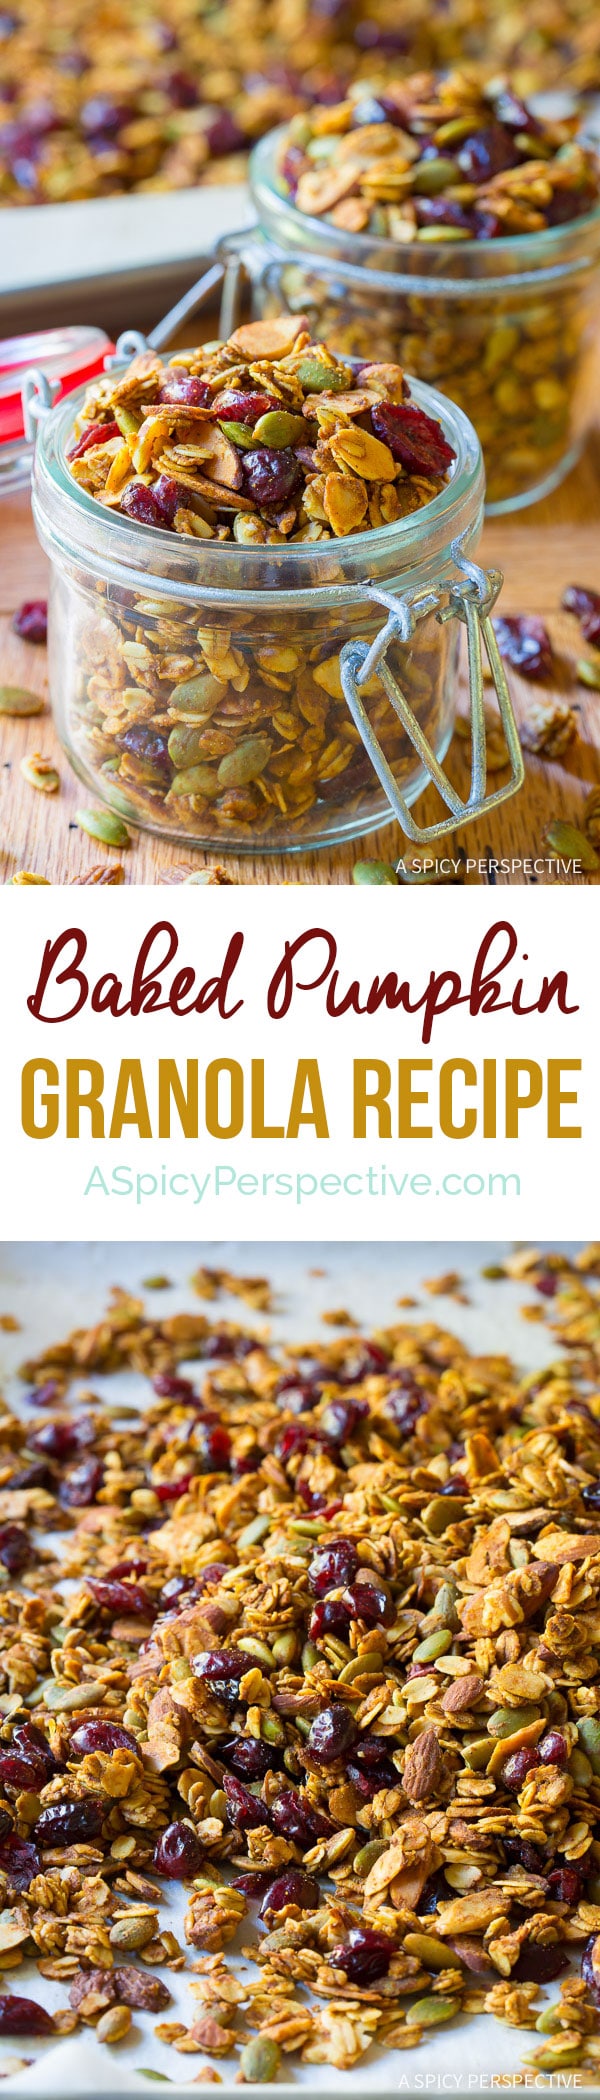 Tastes Like Fall! Baked Pumpkin Granola Recipe on ASpicyPerspective.com